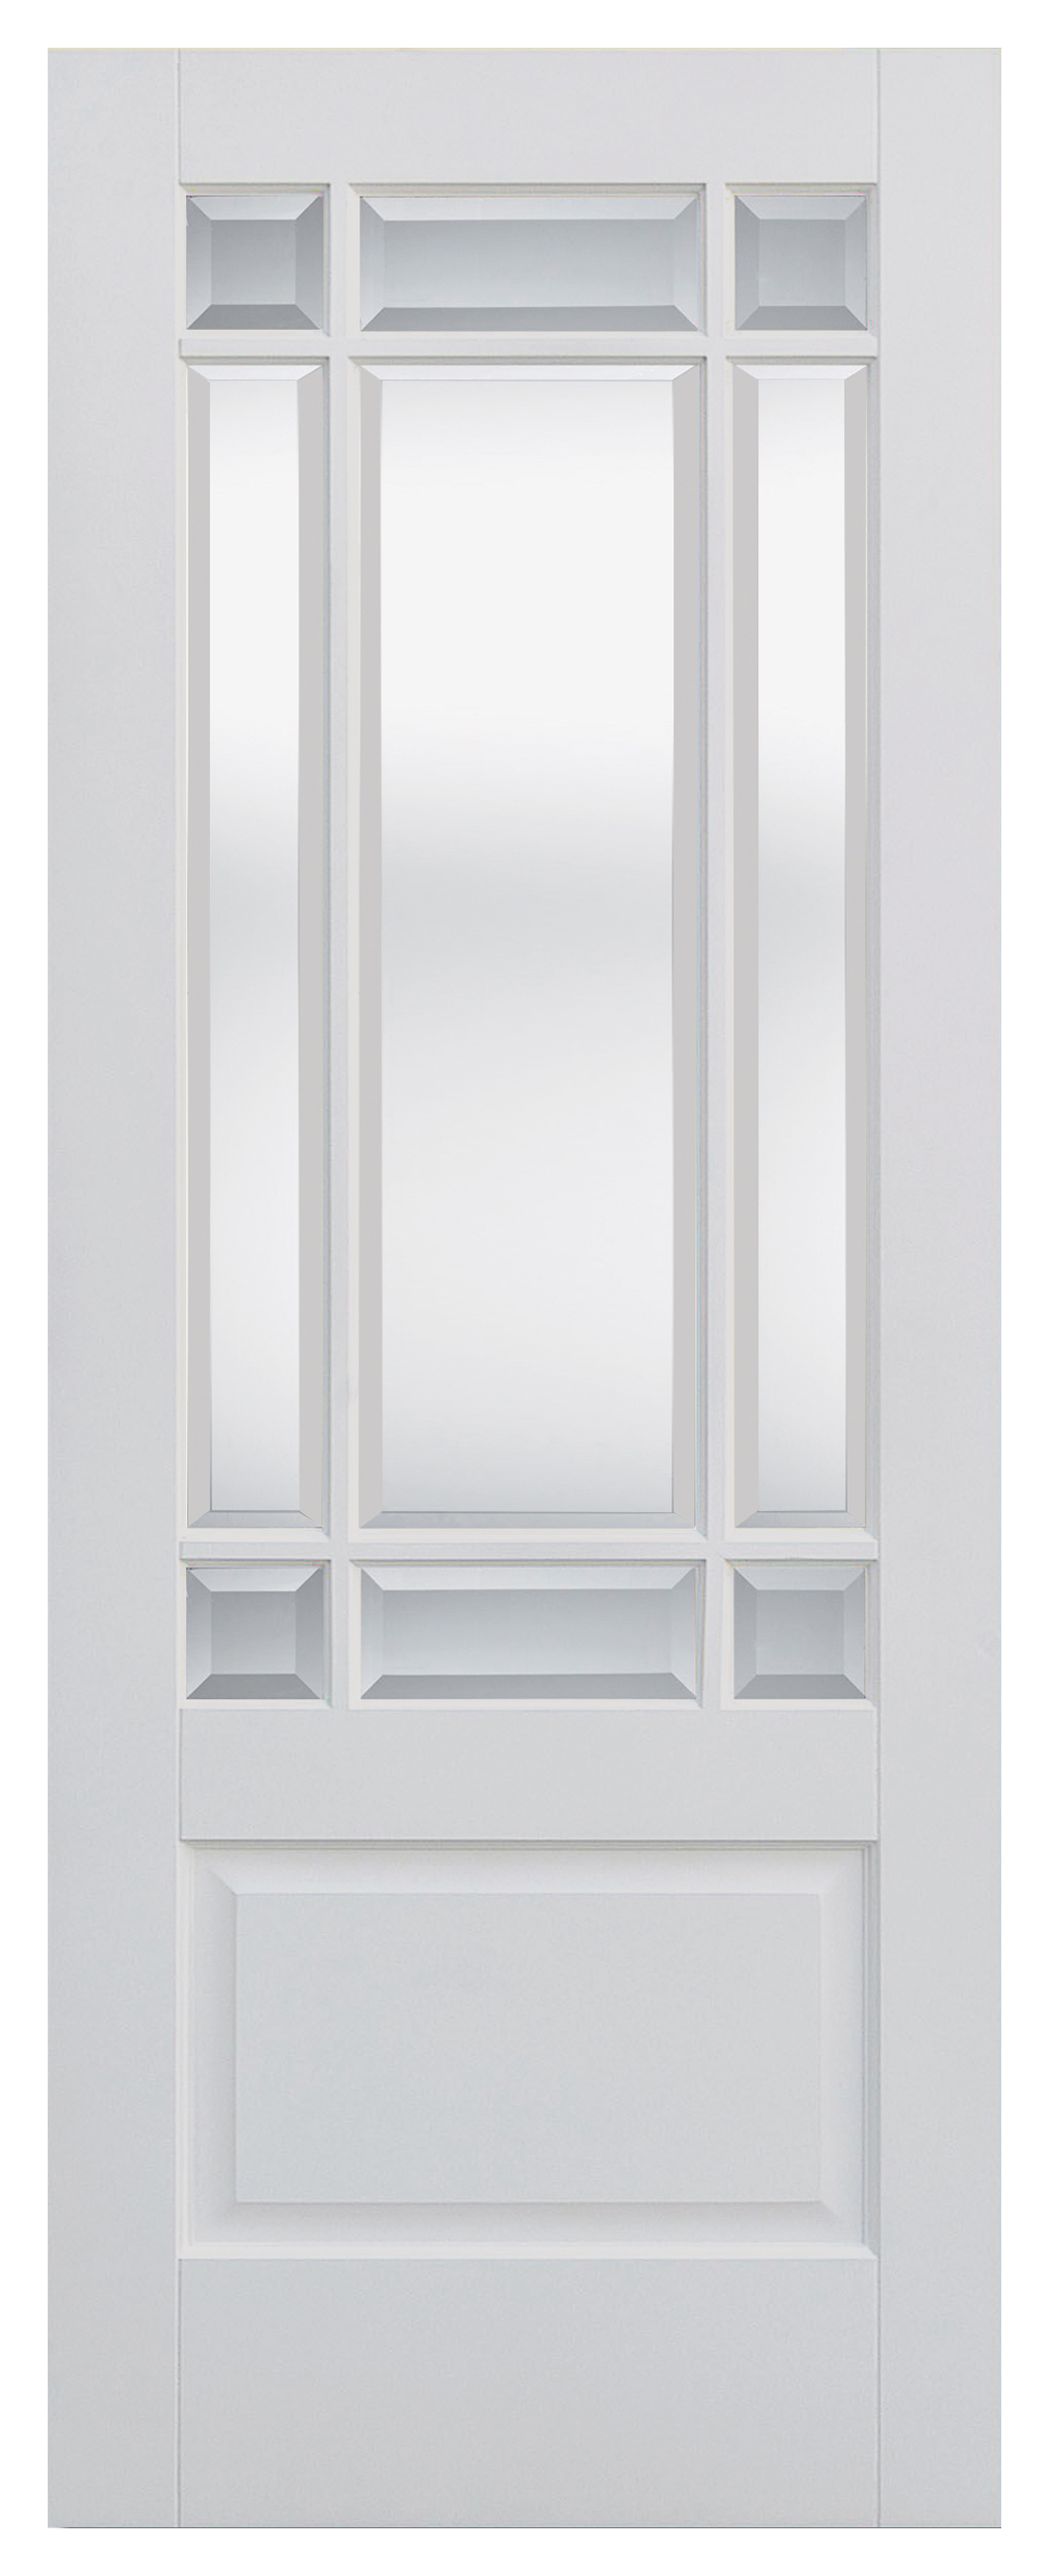 Image of LPD Internal Downham 9 Lite Glazed Primed White Solid Core Door - 610 x 1981mm